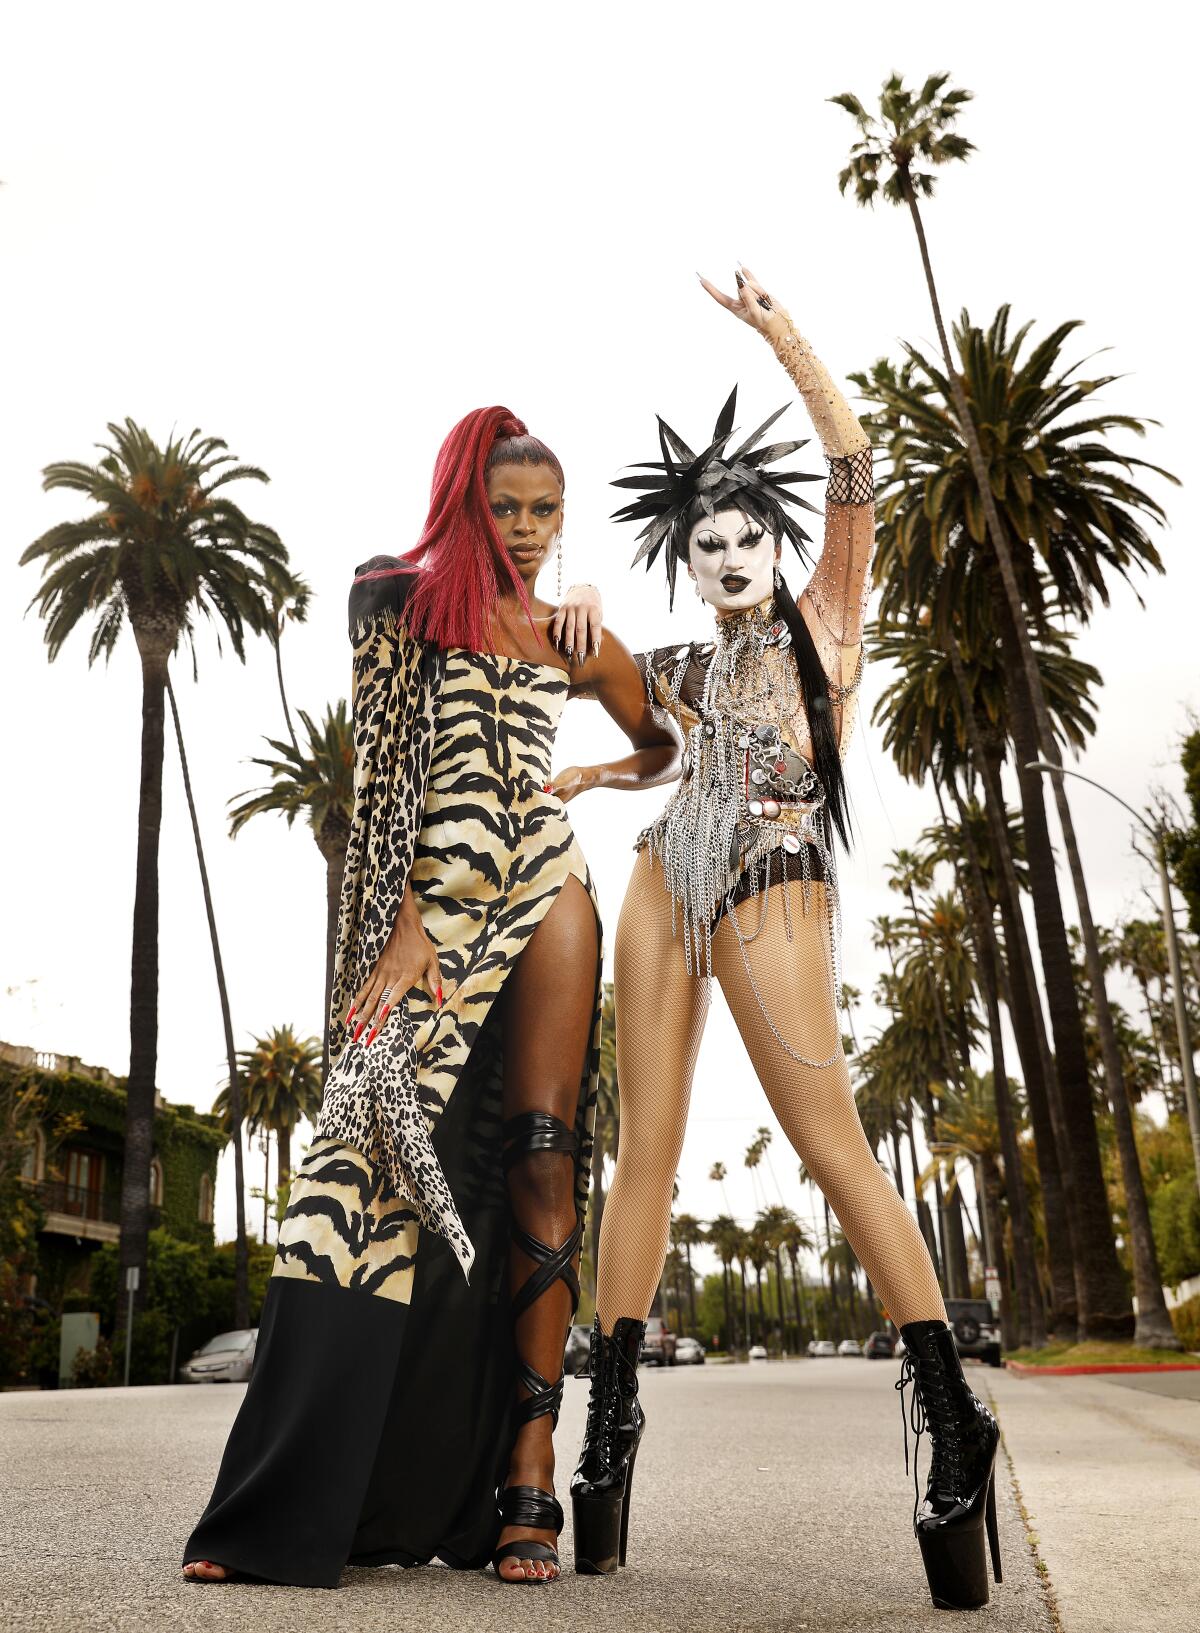  L.A. based drag queens Symone, left, and Gottmik.